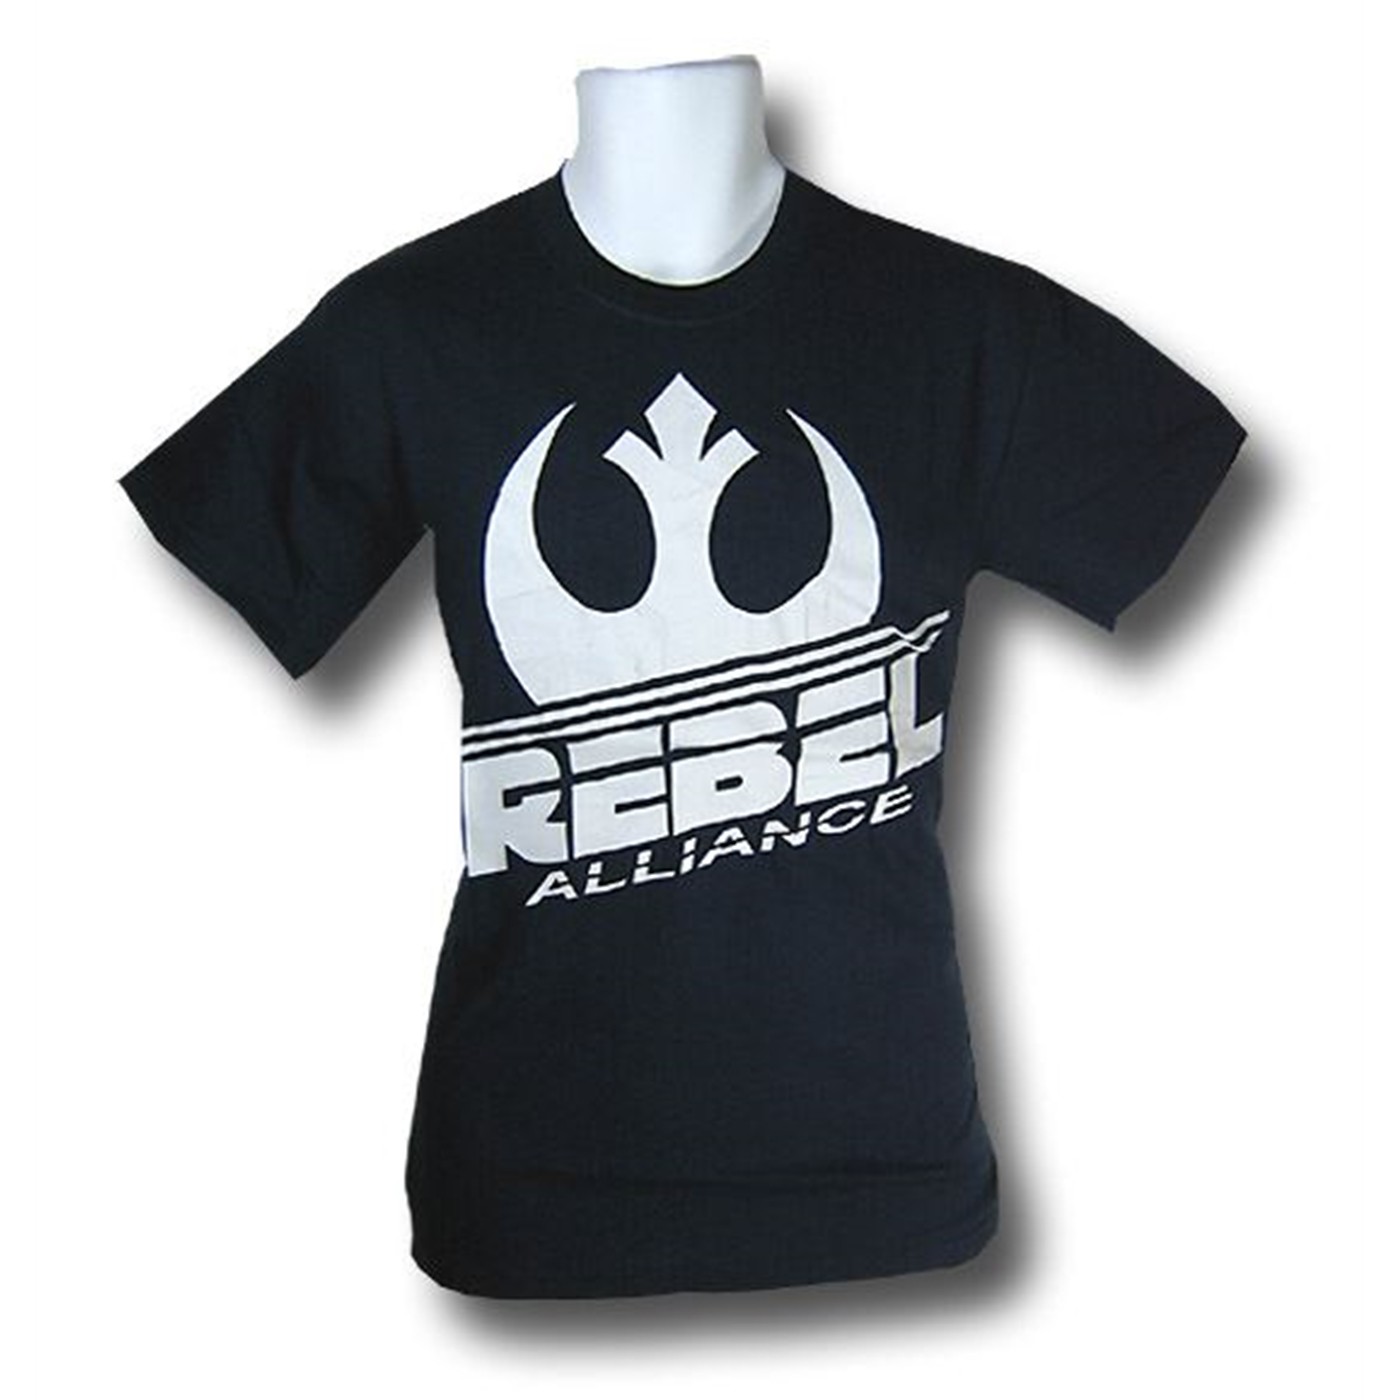 Star wars rebel logo t shirt seen